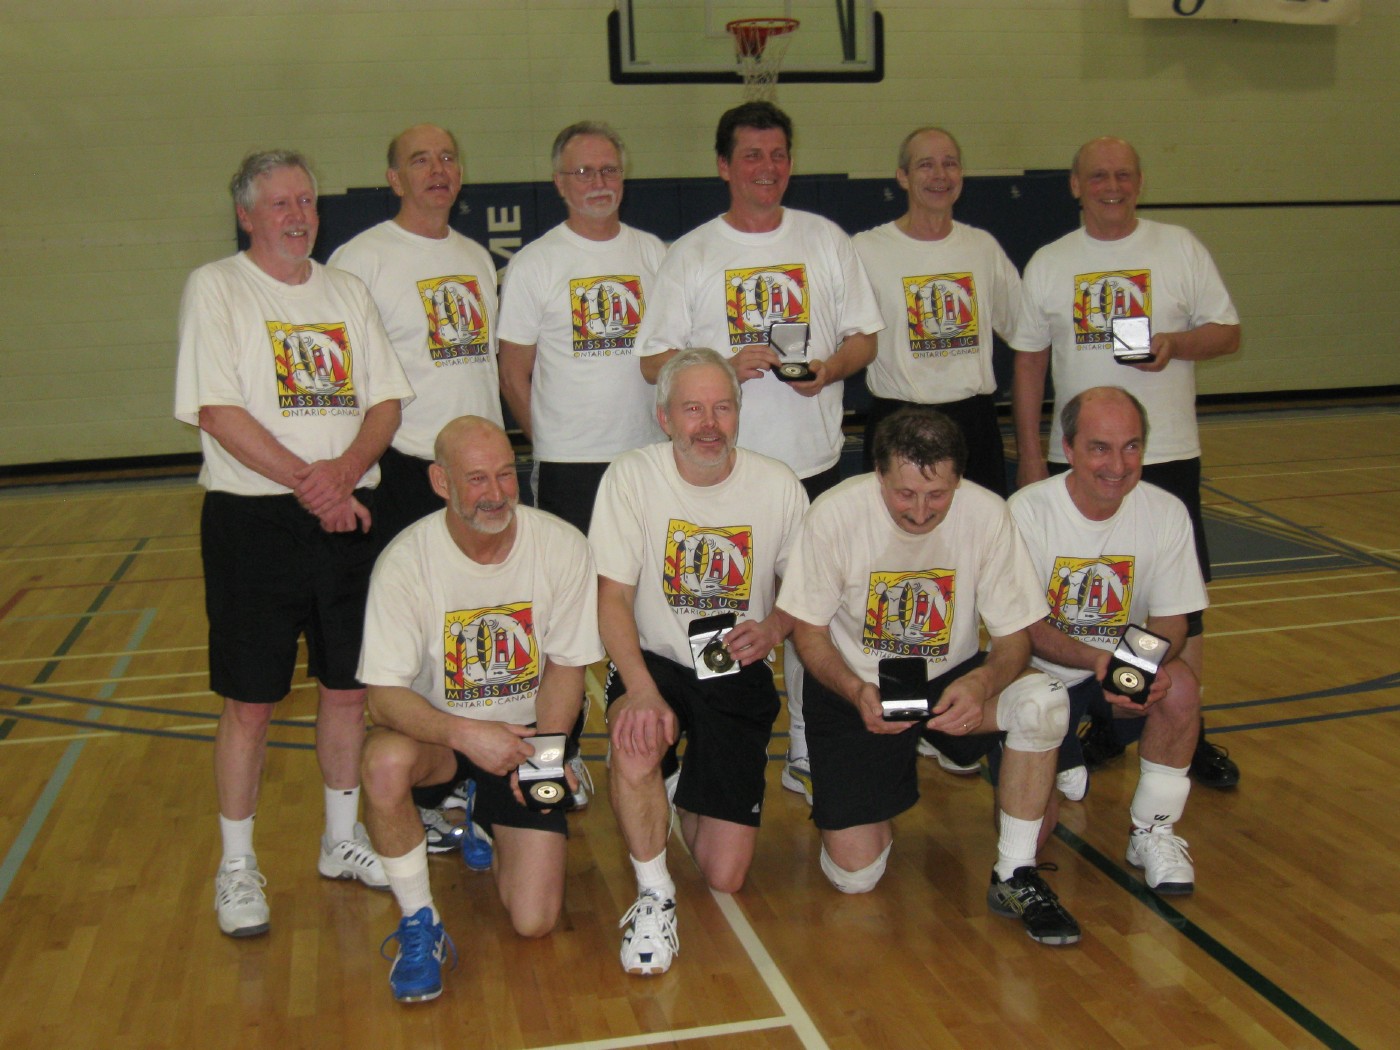 [2009 Ontario Seniors Games team, photo 4]